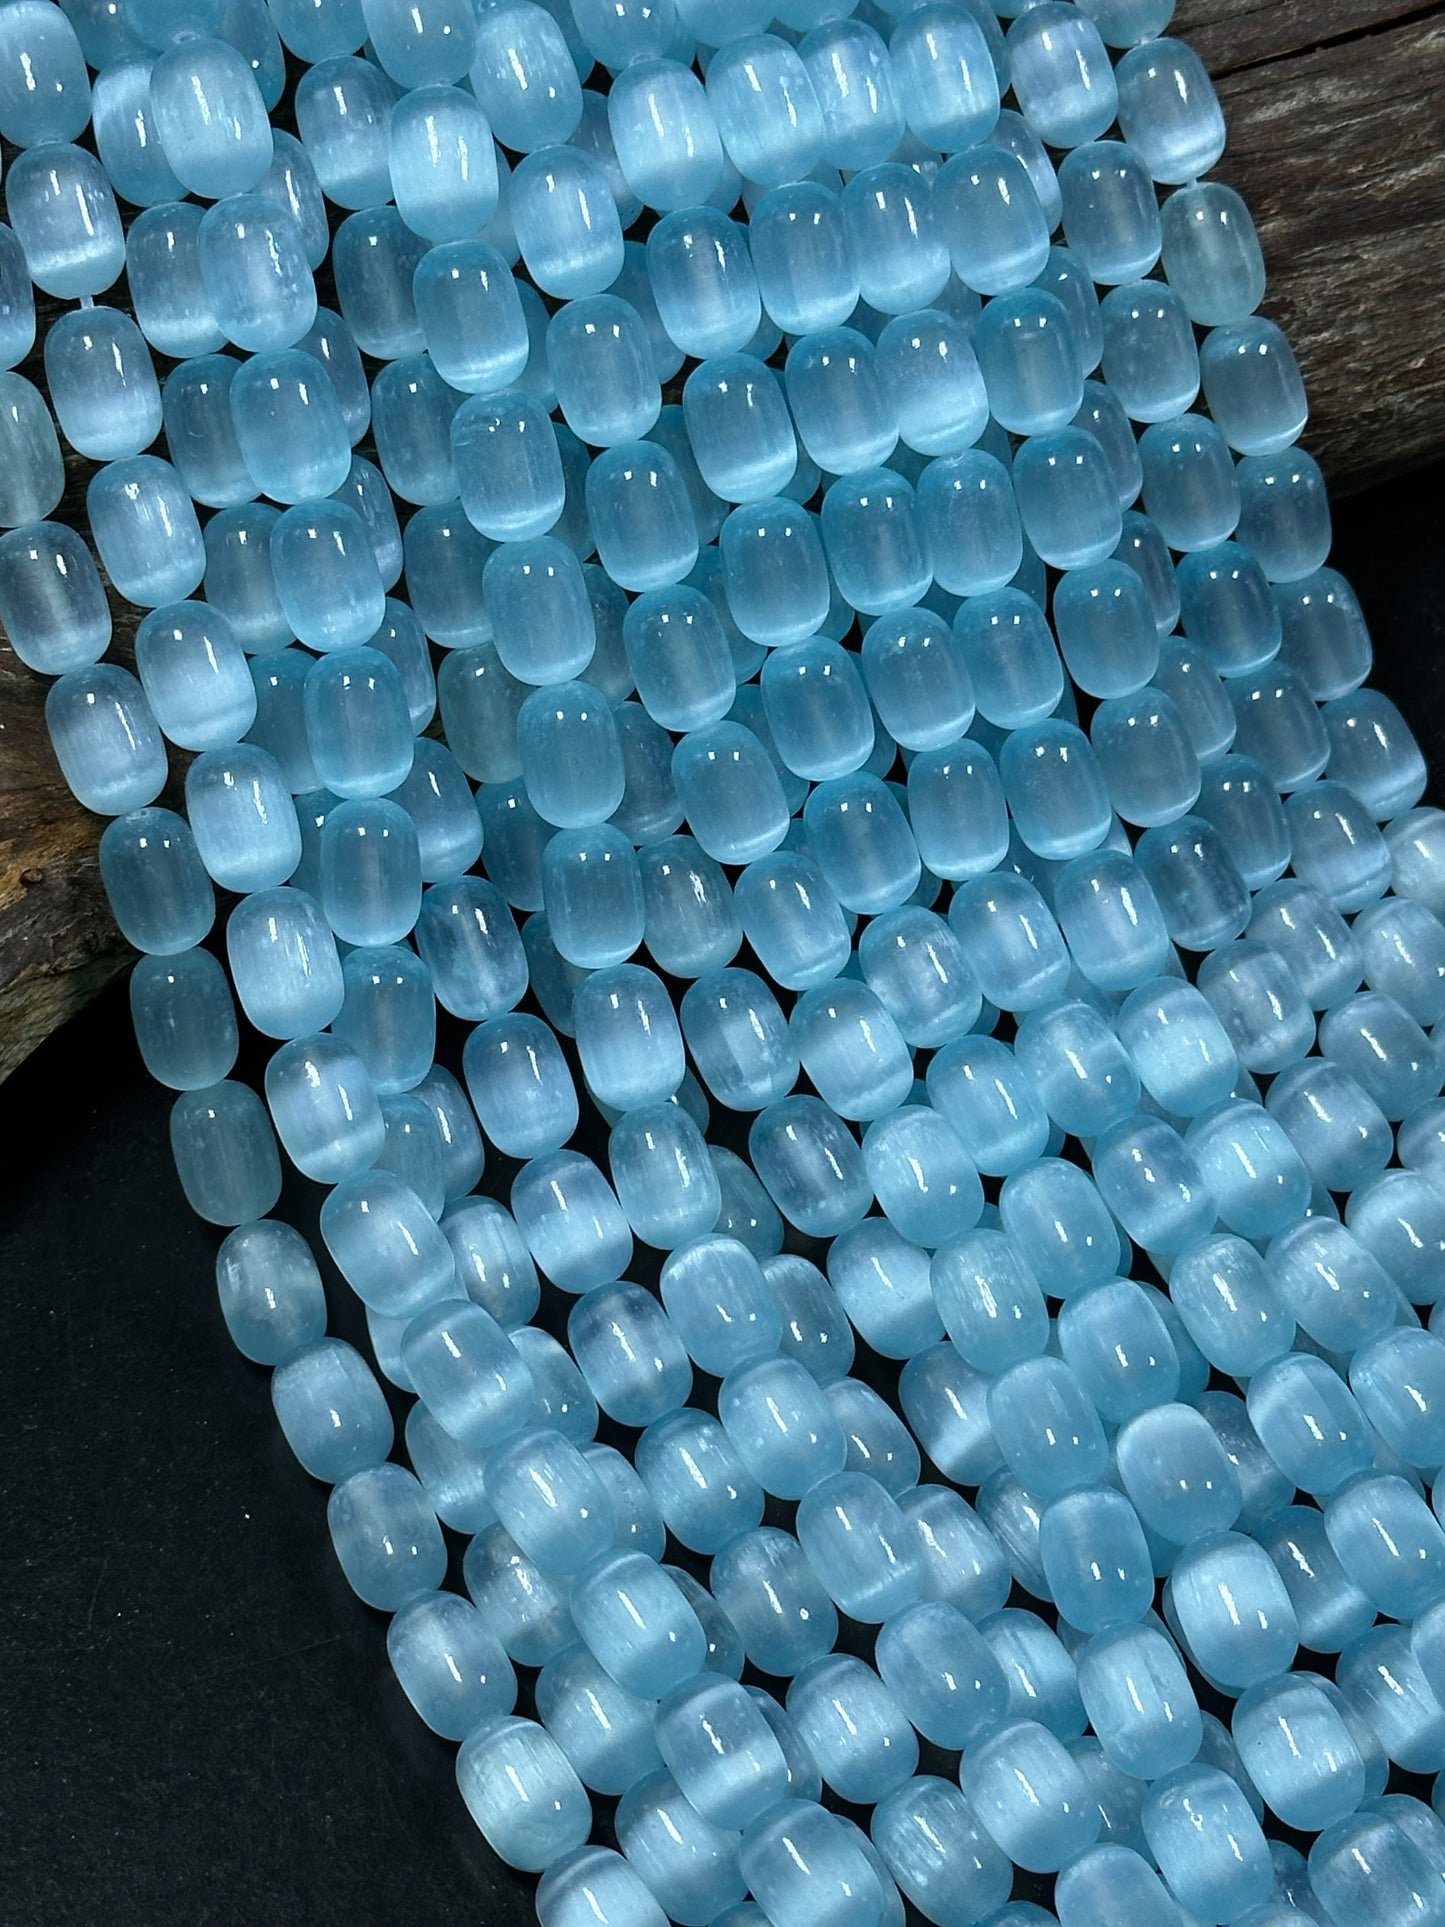 Natural Blue Selenite Gemstone Bead 12x8mm Tube Shape Bead, Beautiful Turquoise Blue Color Selenite Beads, Great Quality Full Strand 15.5"